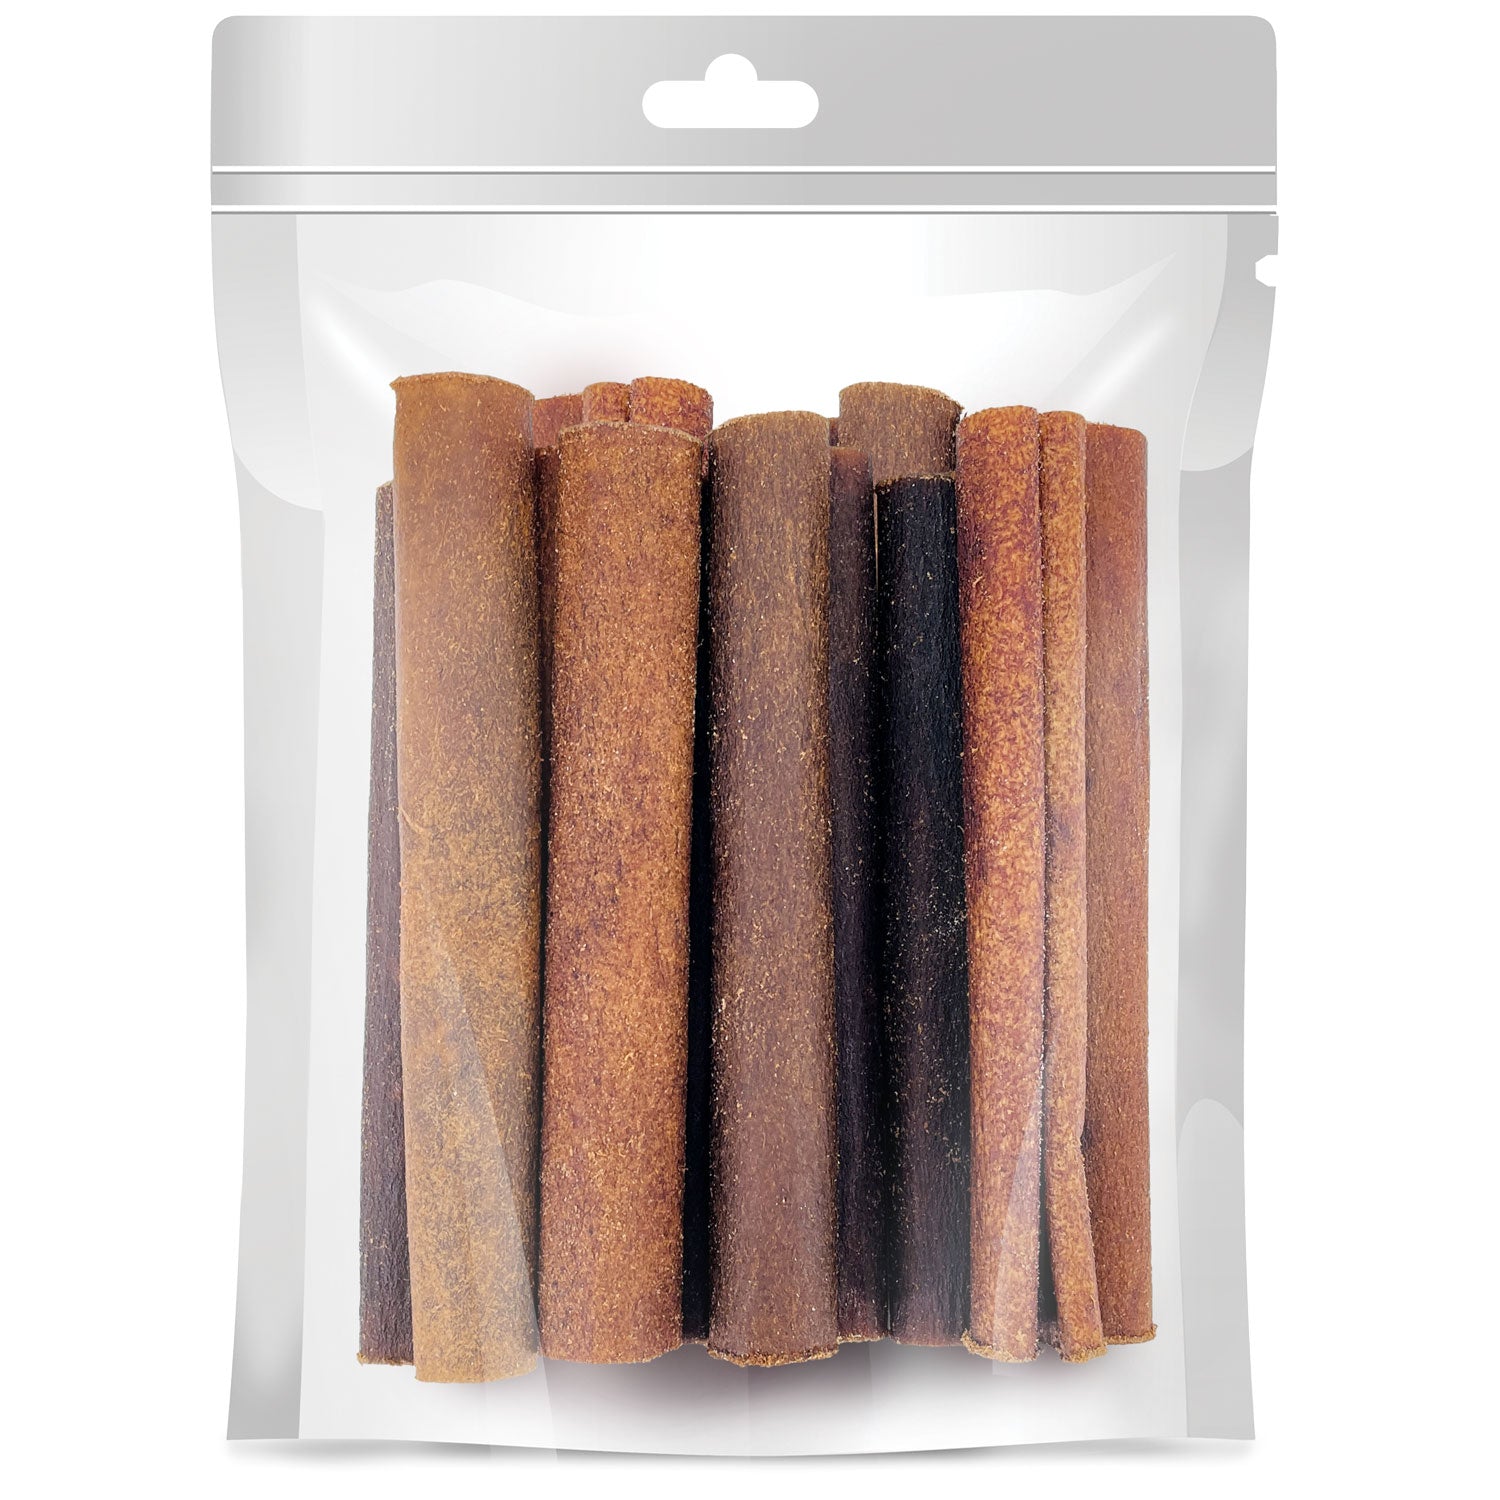 ValueBull USA Collagen Sticks, Premium Beef Dog Chews, 6" Jumbo, 400 Count RESALE PACKS (40 x 10 Count)